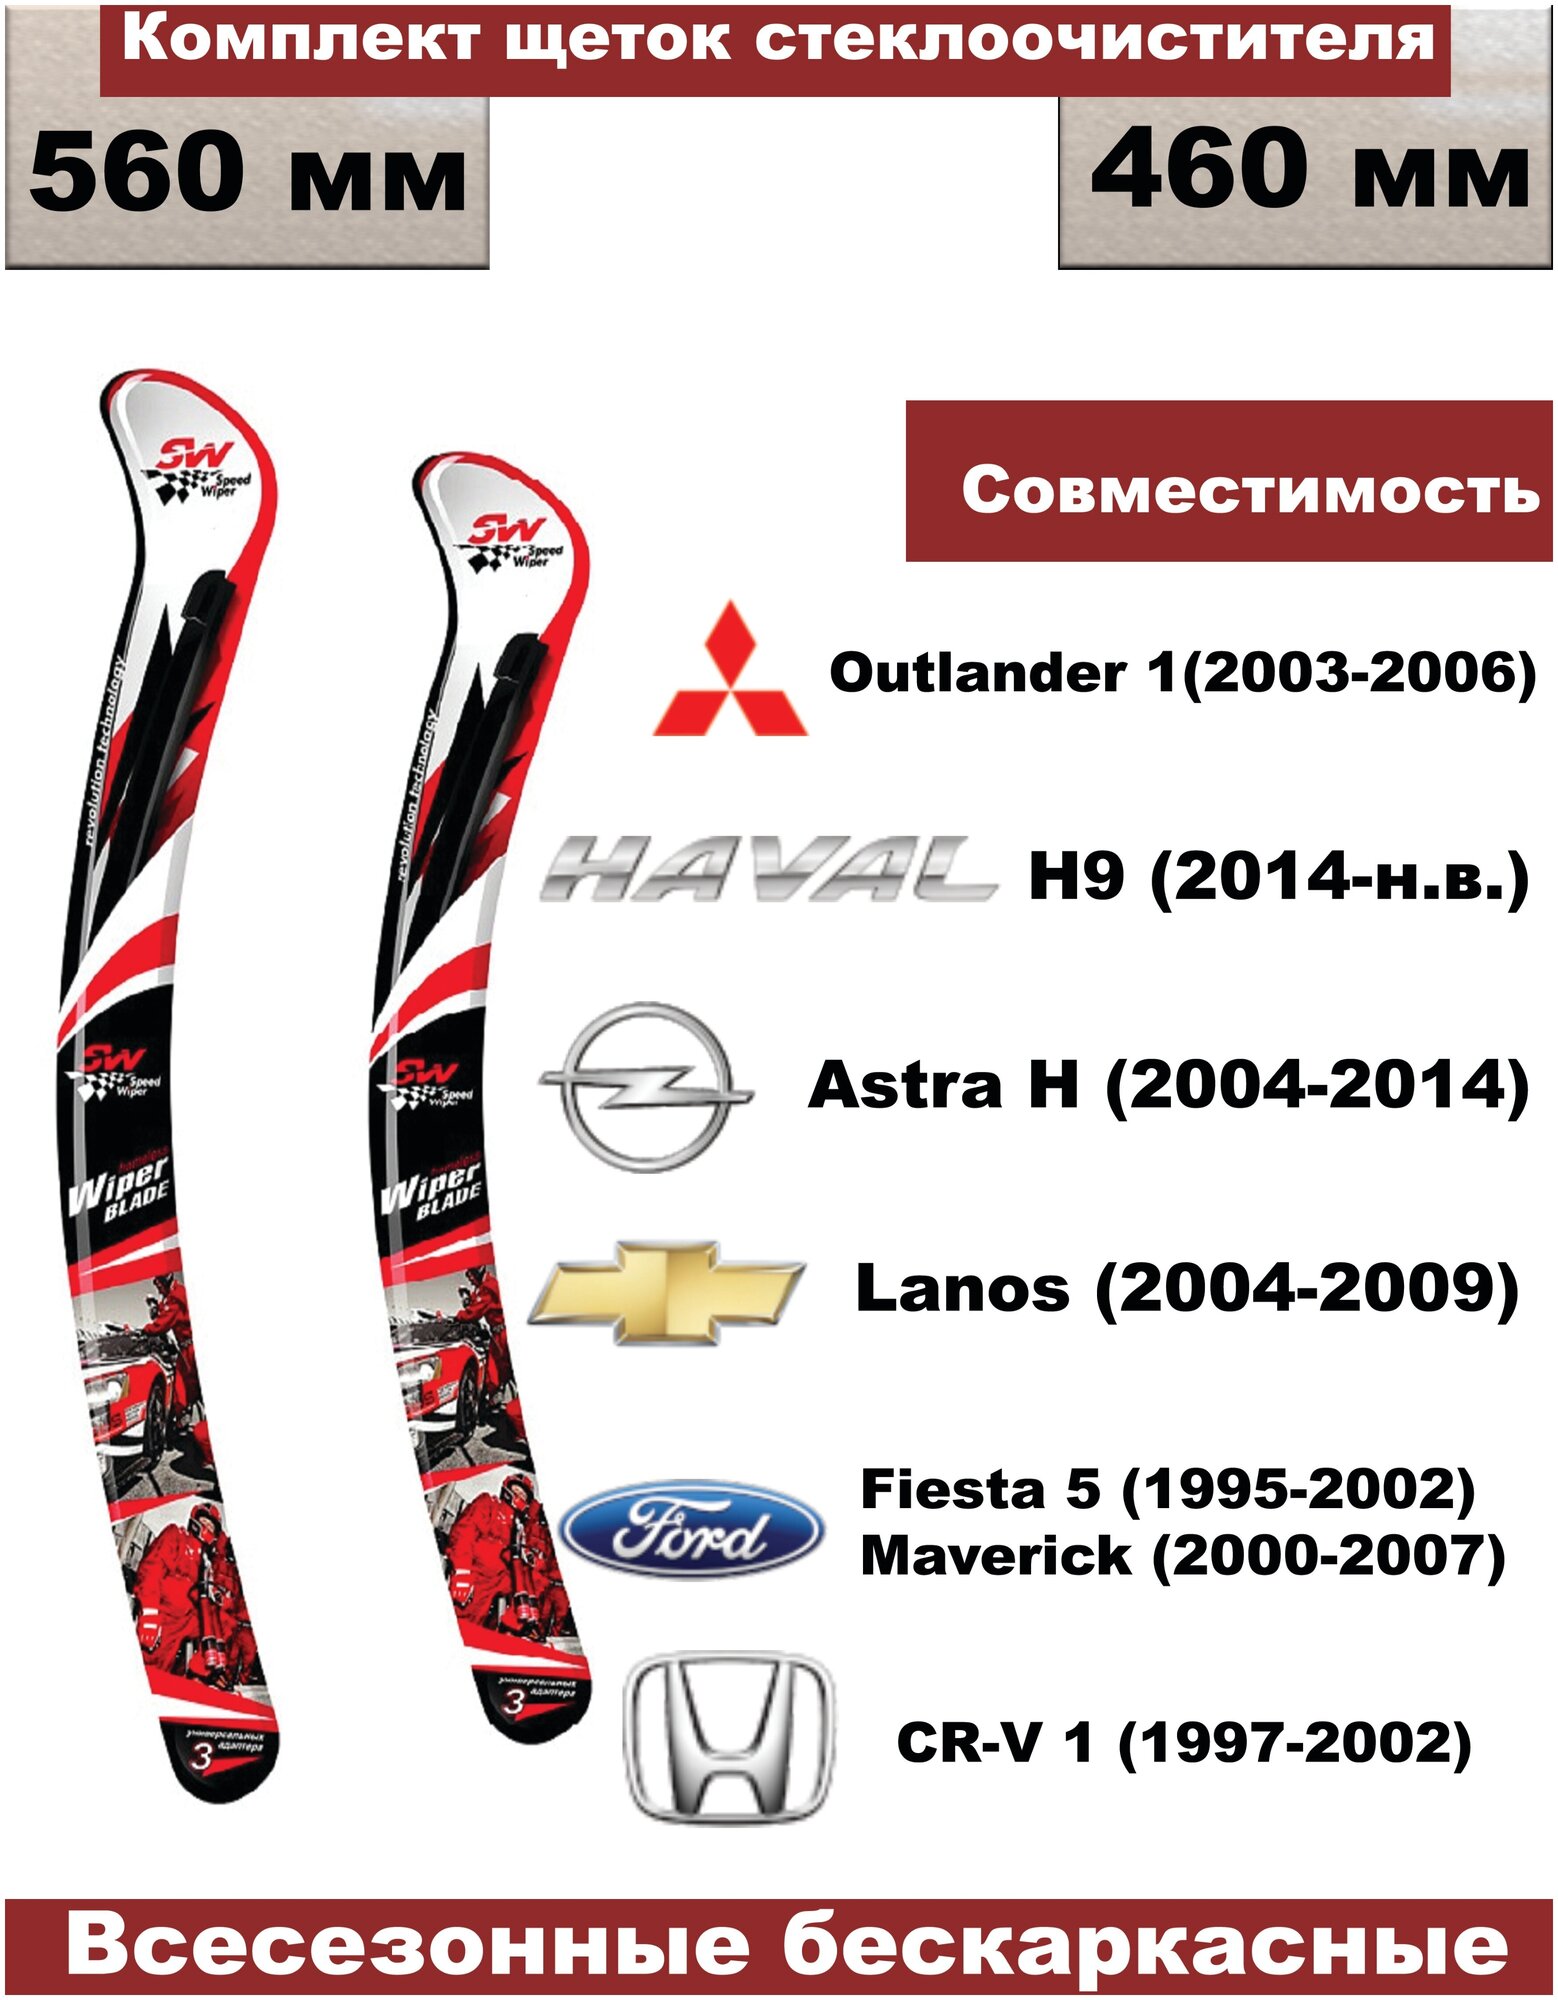 Комплект щеток стеклоочистителей Opel Astra (04-14 H) Chevrolet Lanos (04-09)Ford Fiesta 5 (95-02)Ford Maverick (00-07)/Honda CR-V 1 (97-02)